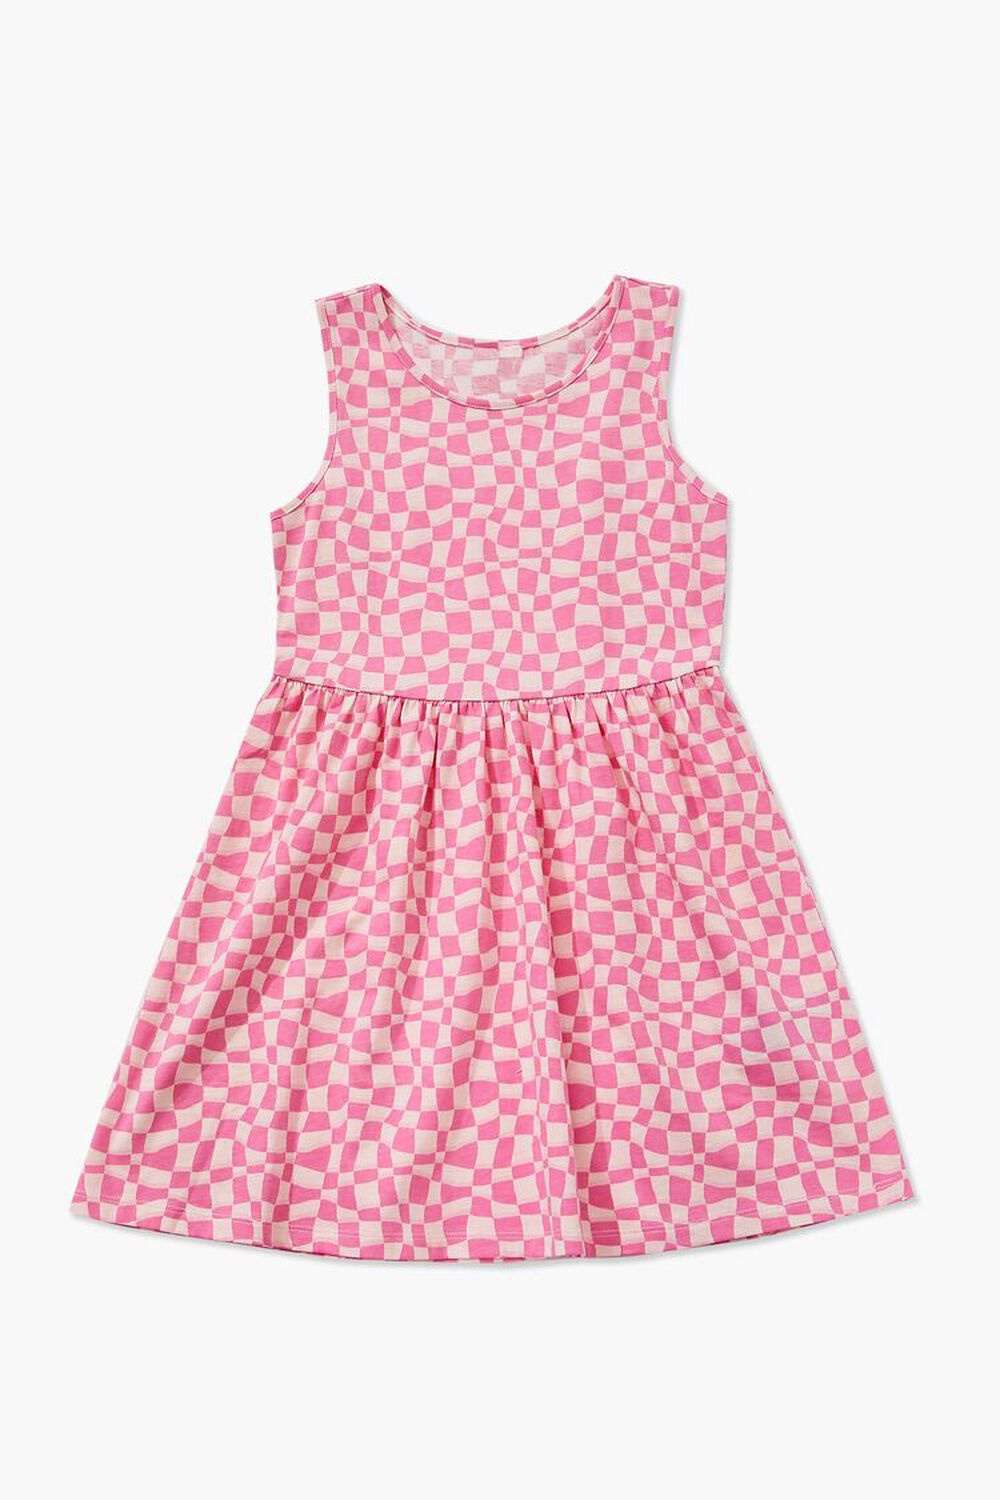 PINK/MULTI Girls Checkered A-Line Dress (Kids), image 1